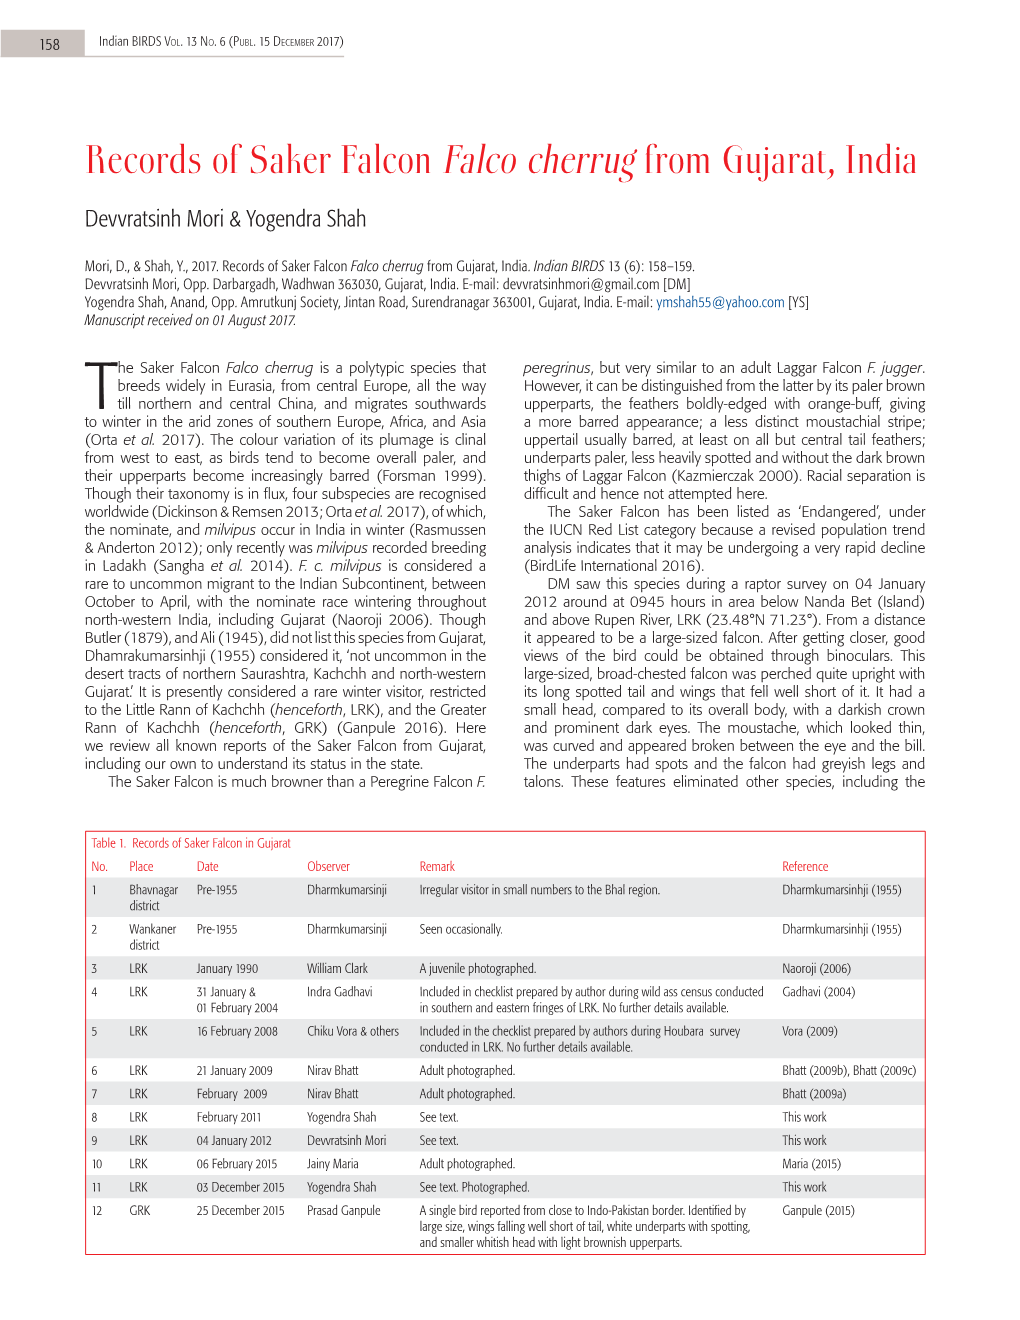 Records of Saker Falcon Falco Cherrug from Gujarat, India